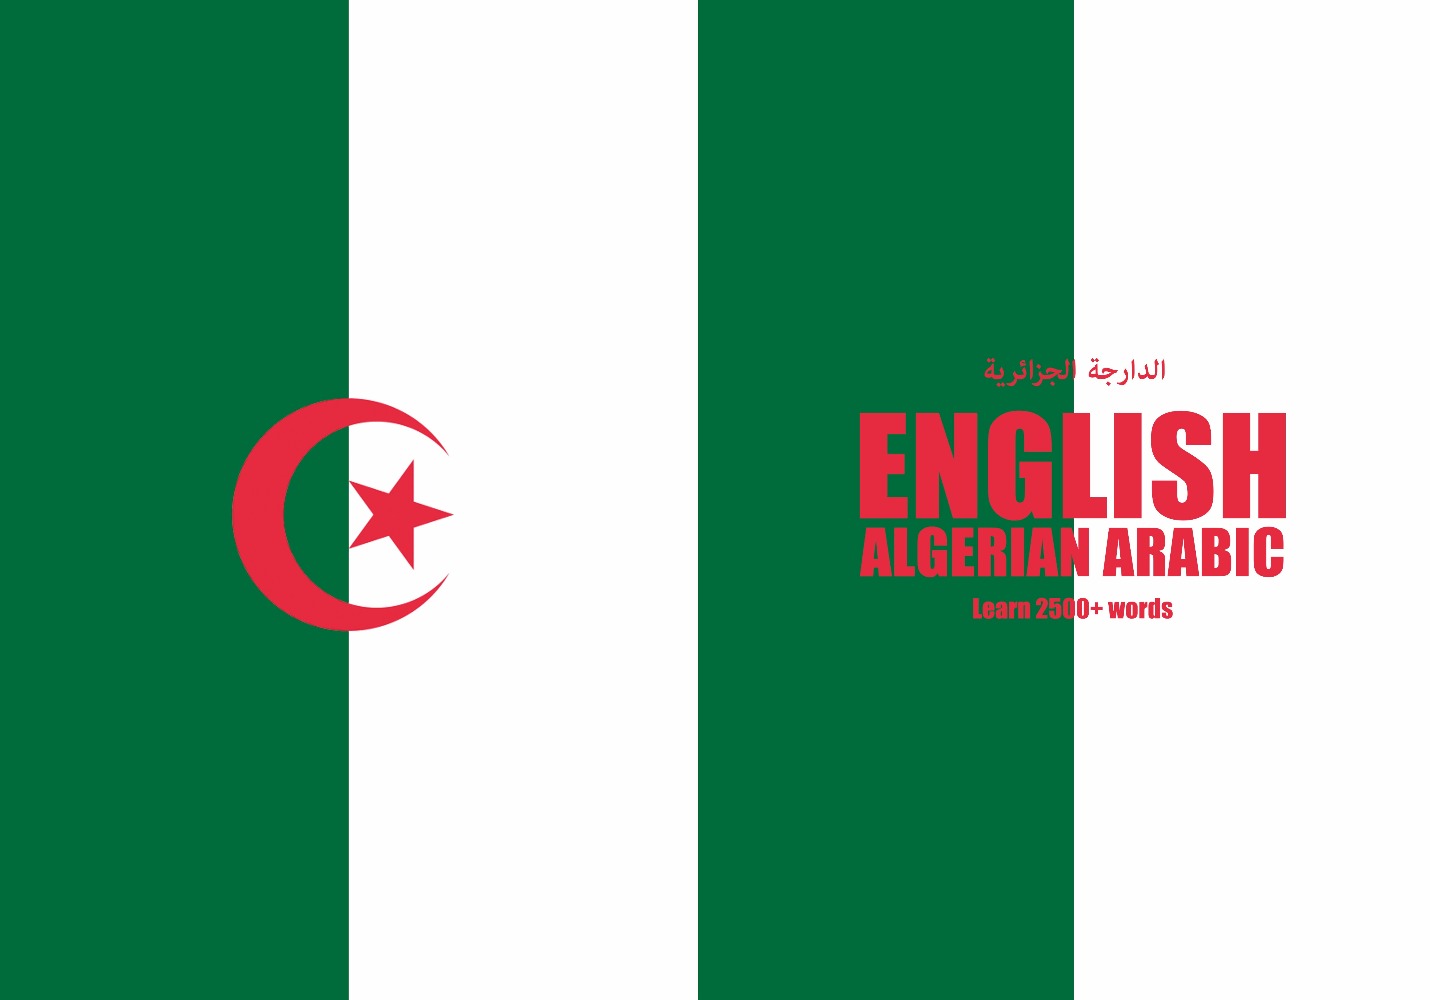 Algerian Arabic notebook cover